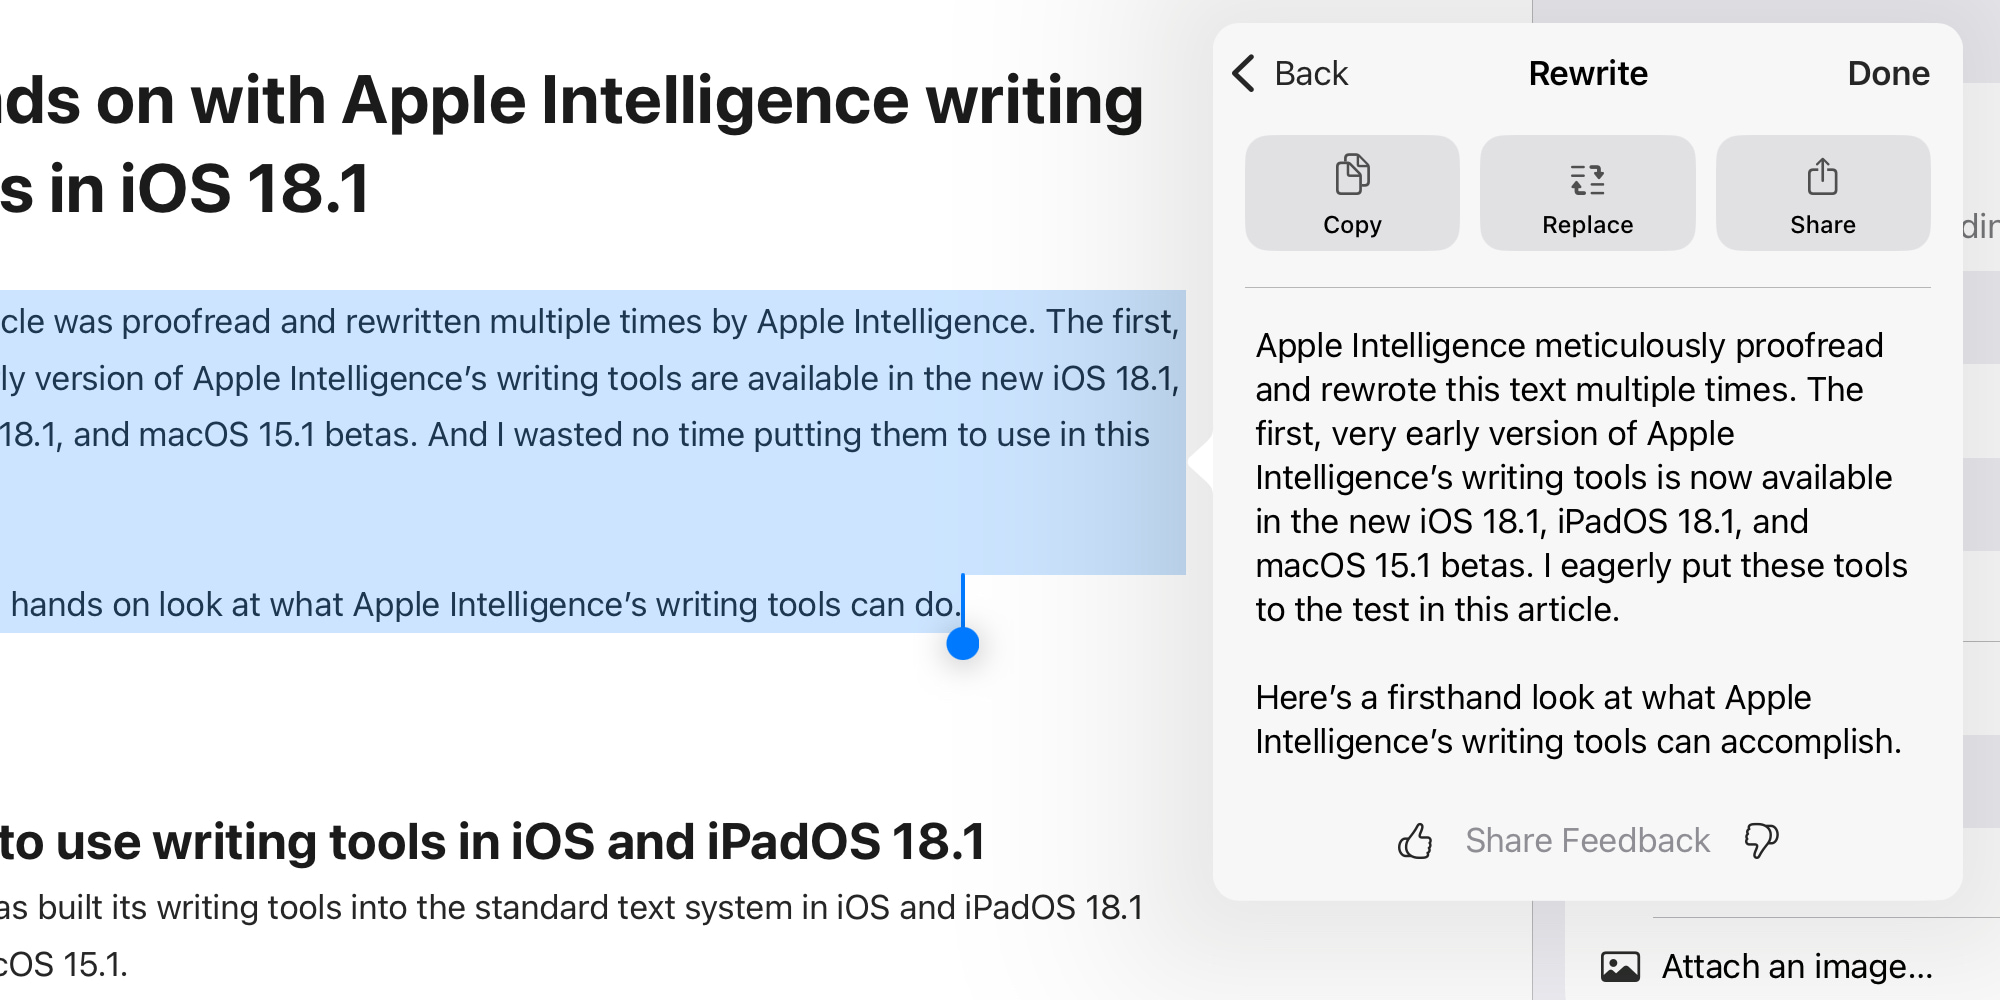 Apple Intelligence rewrite suggestion